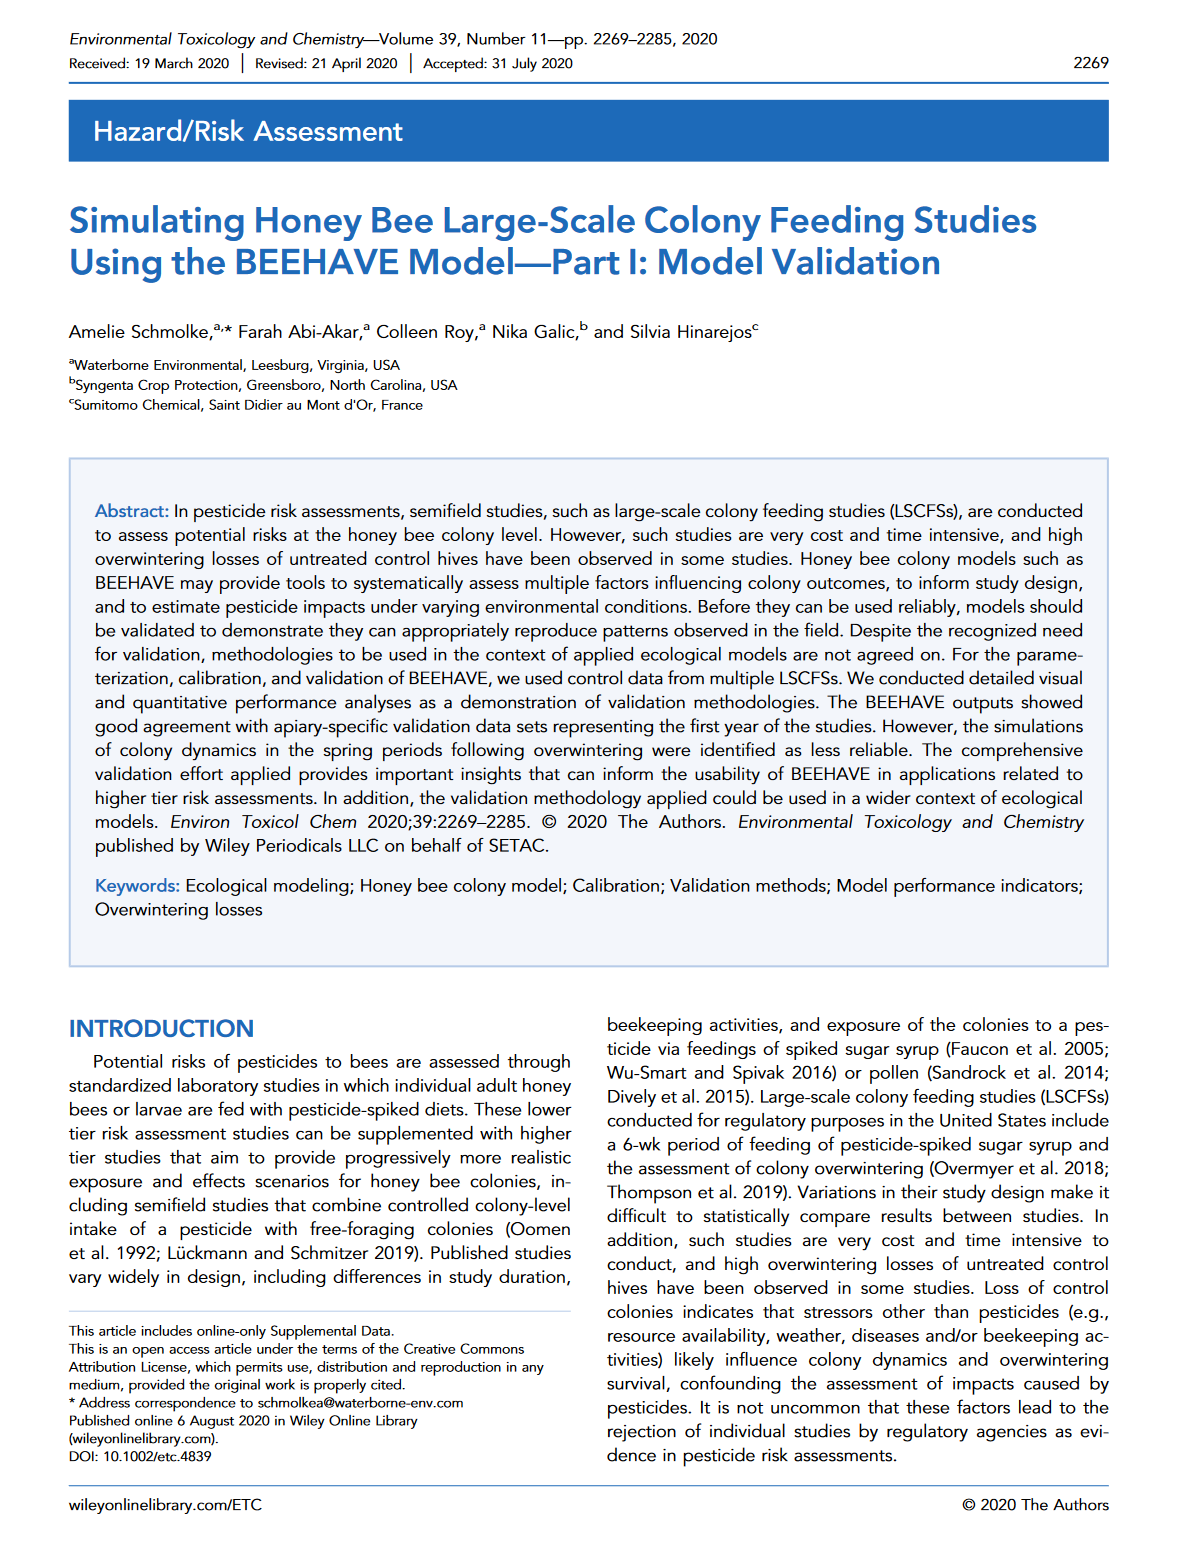 Simulating-honey-bee-large-scale-feeding-studies-part1